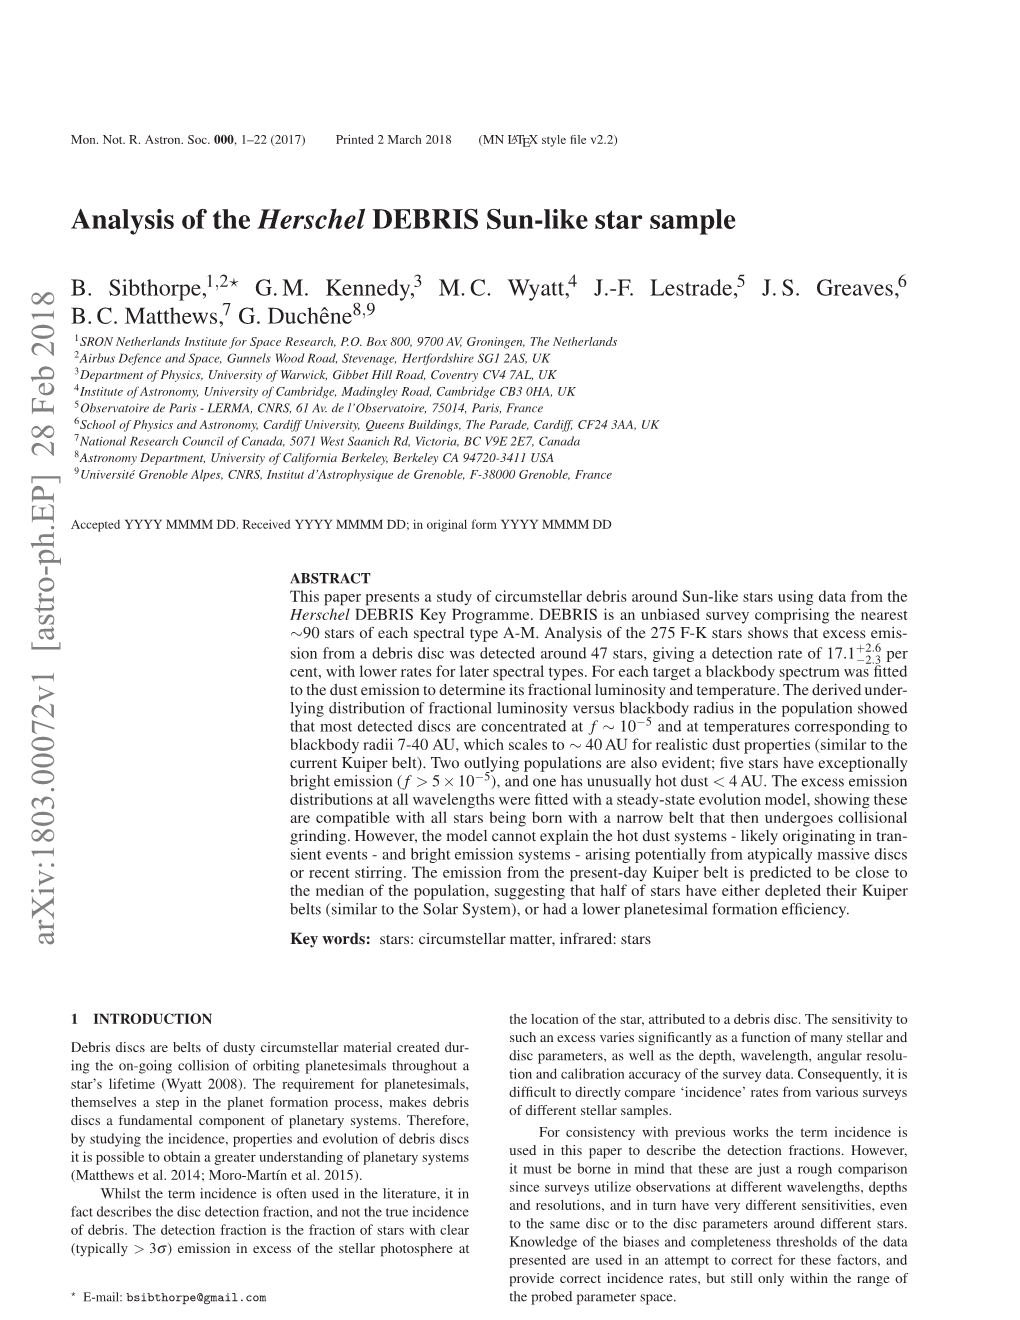 Analysis of the Herschel DEBRIS Sun-Like Star Sample